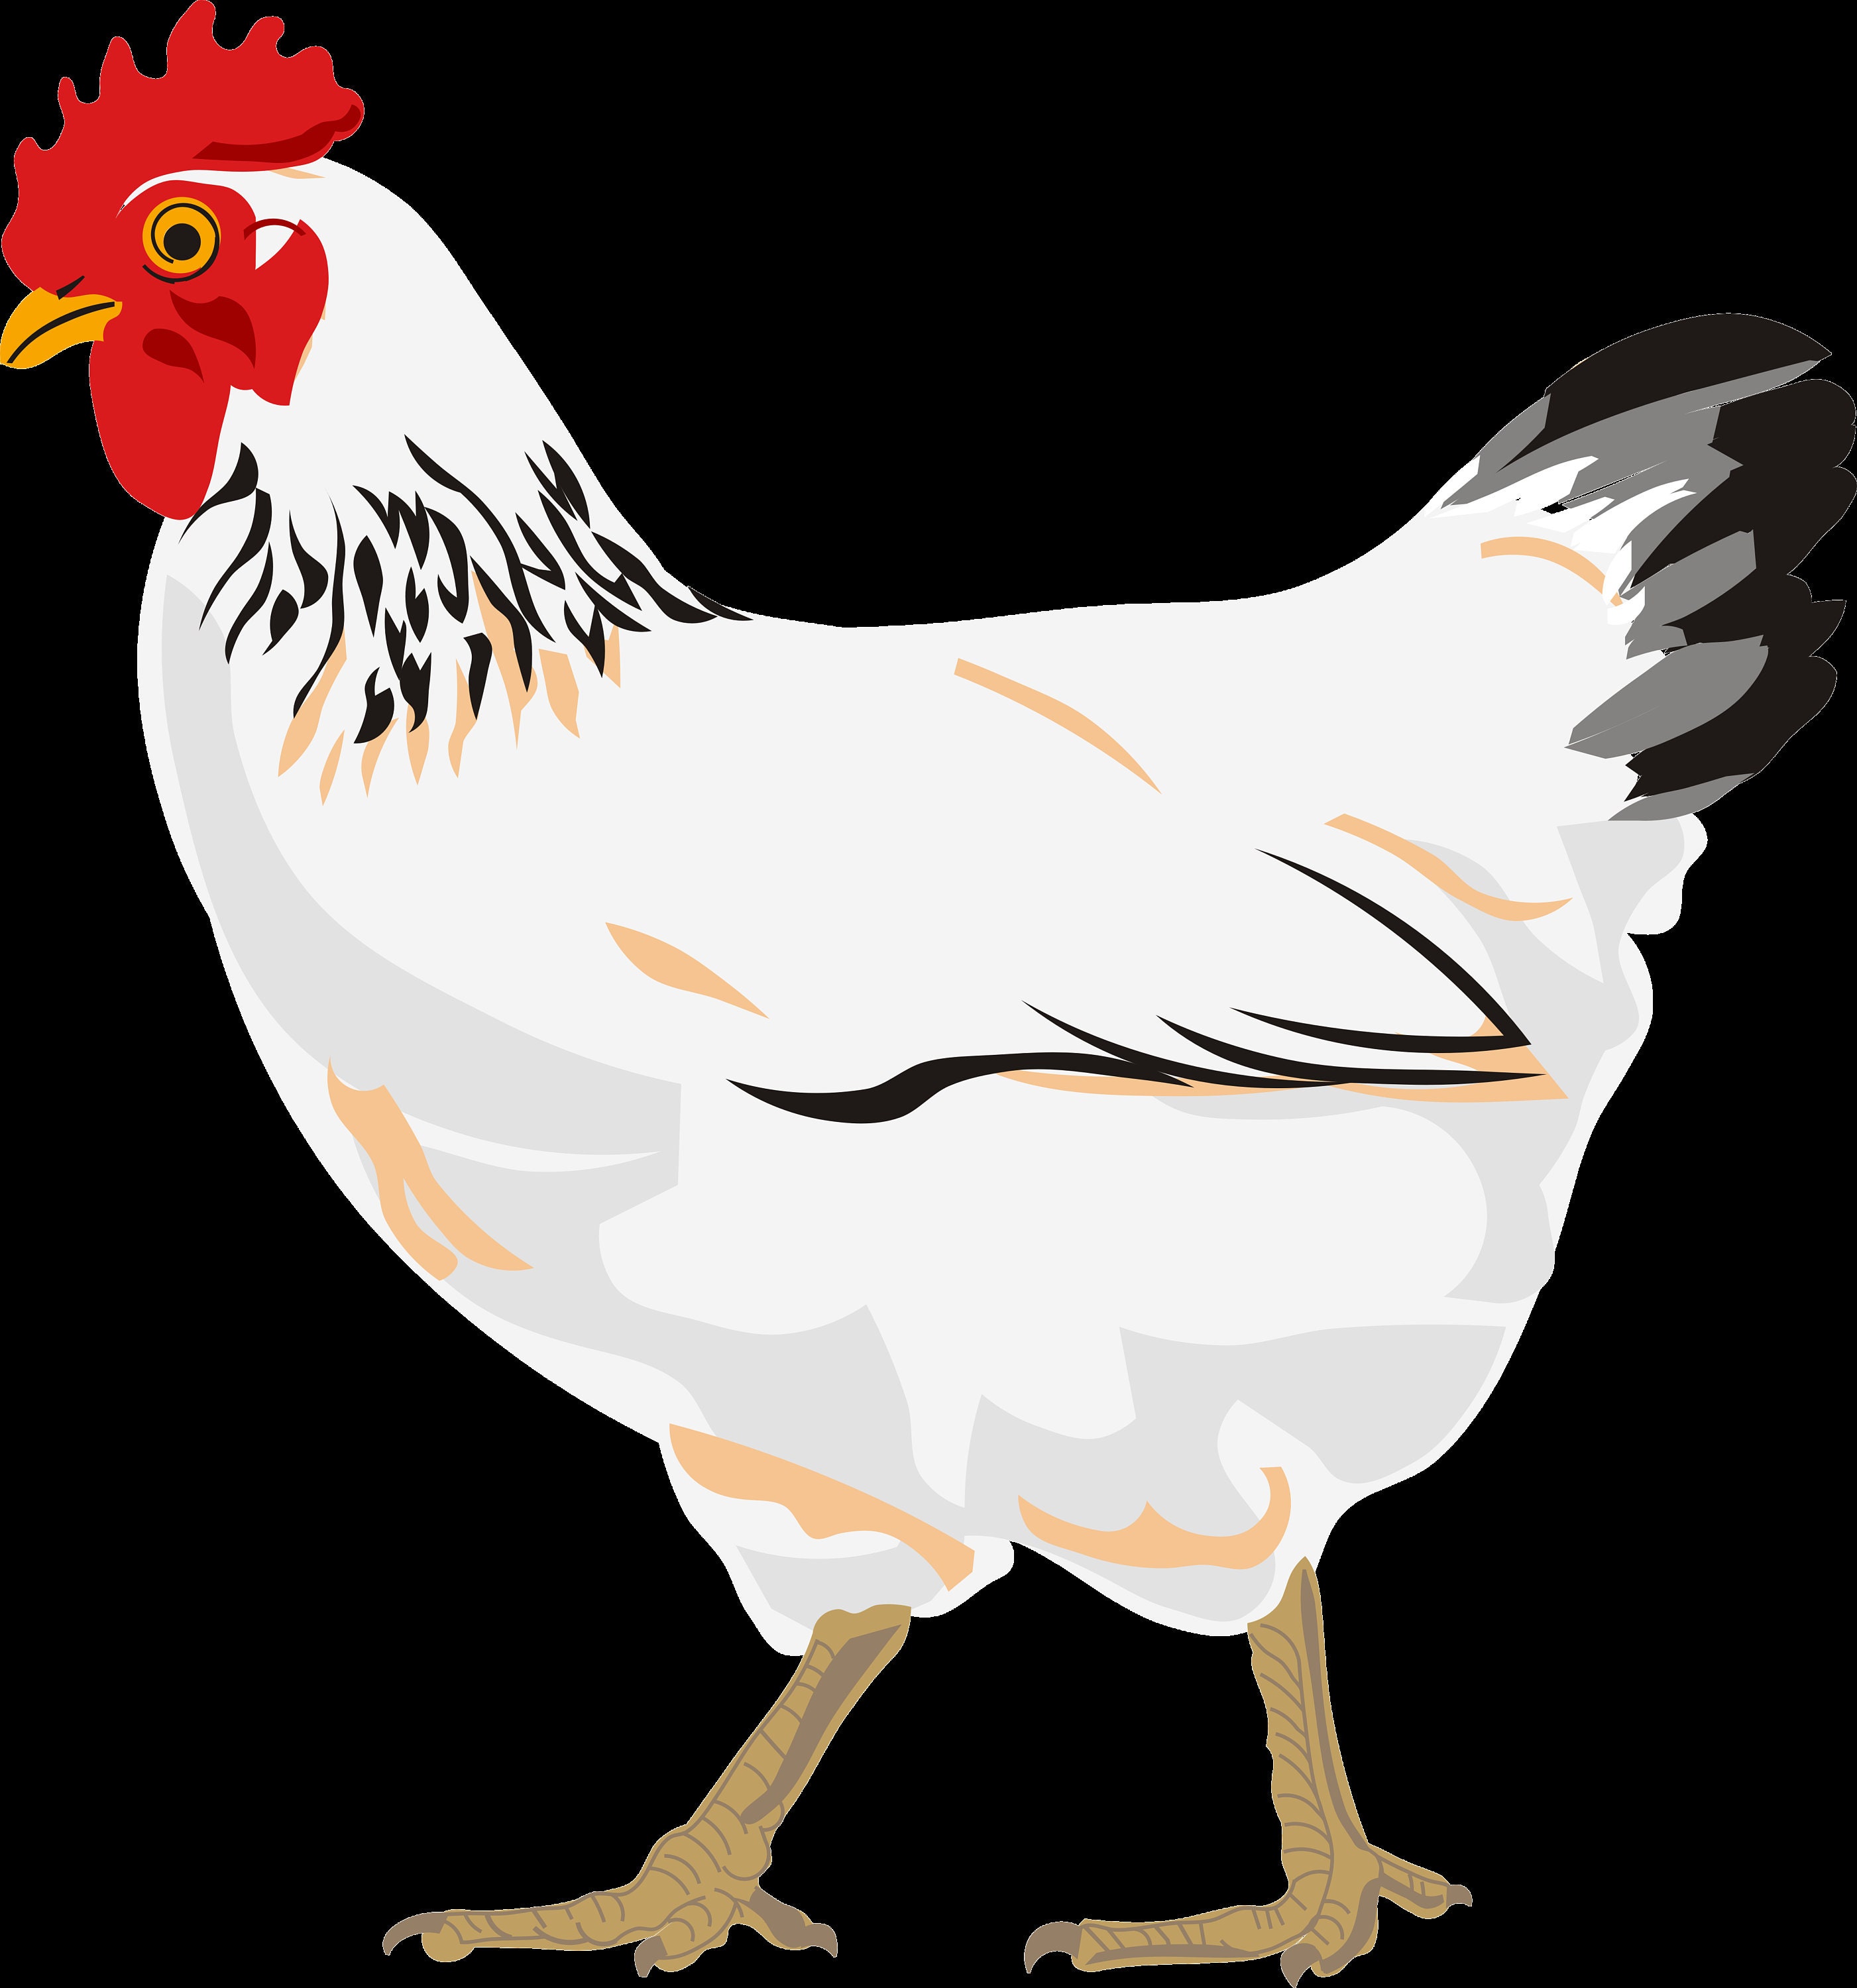 Chicken SVG. Dxf PNG. EPS. Jpg Big Size 300 Dpi - Etsy